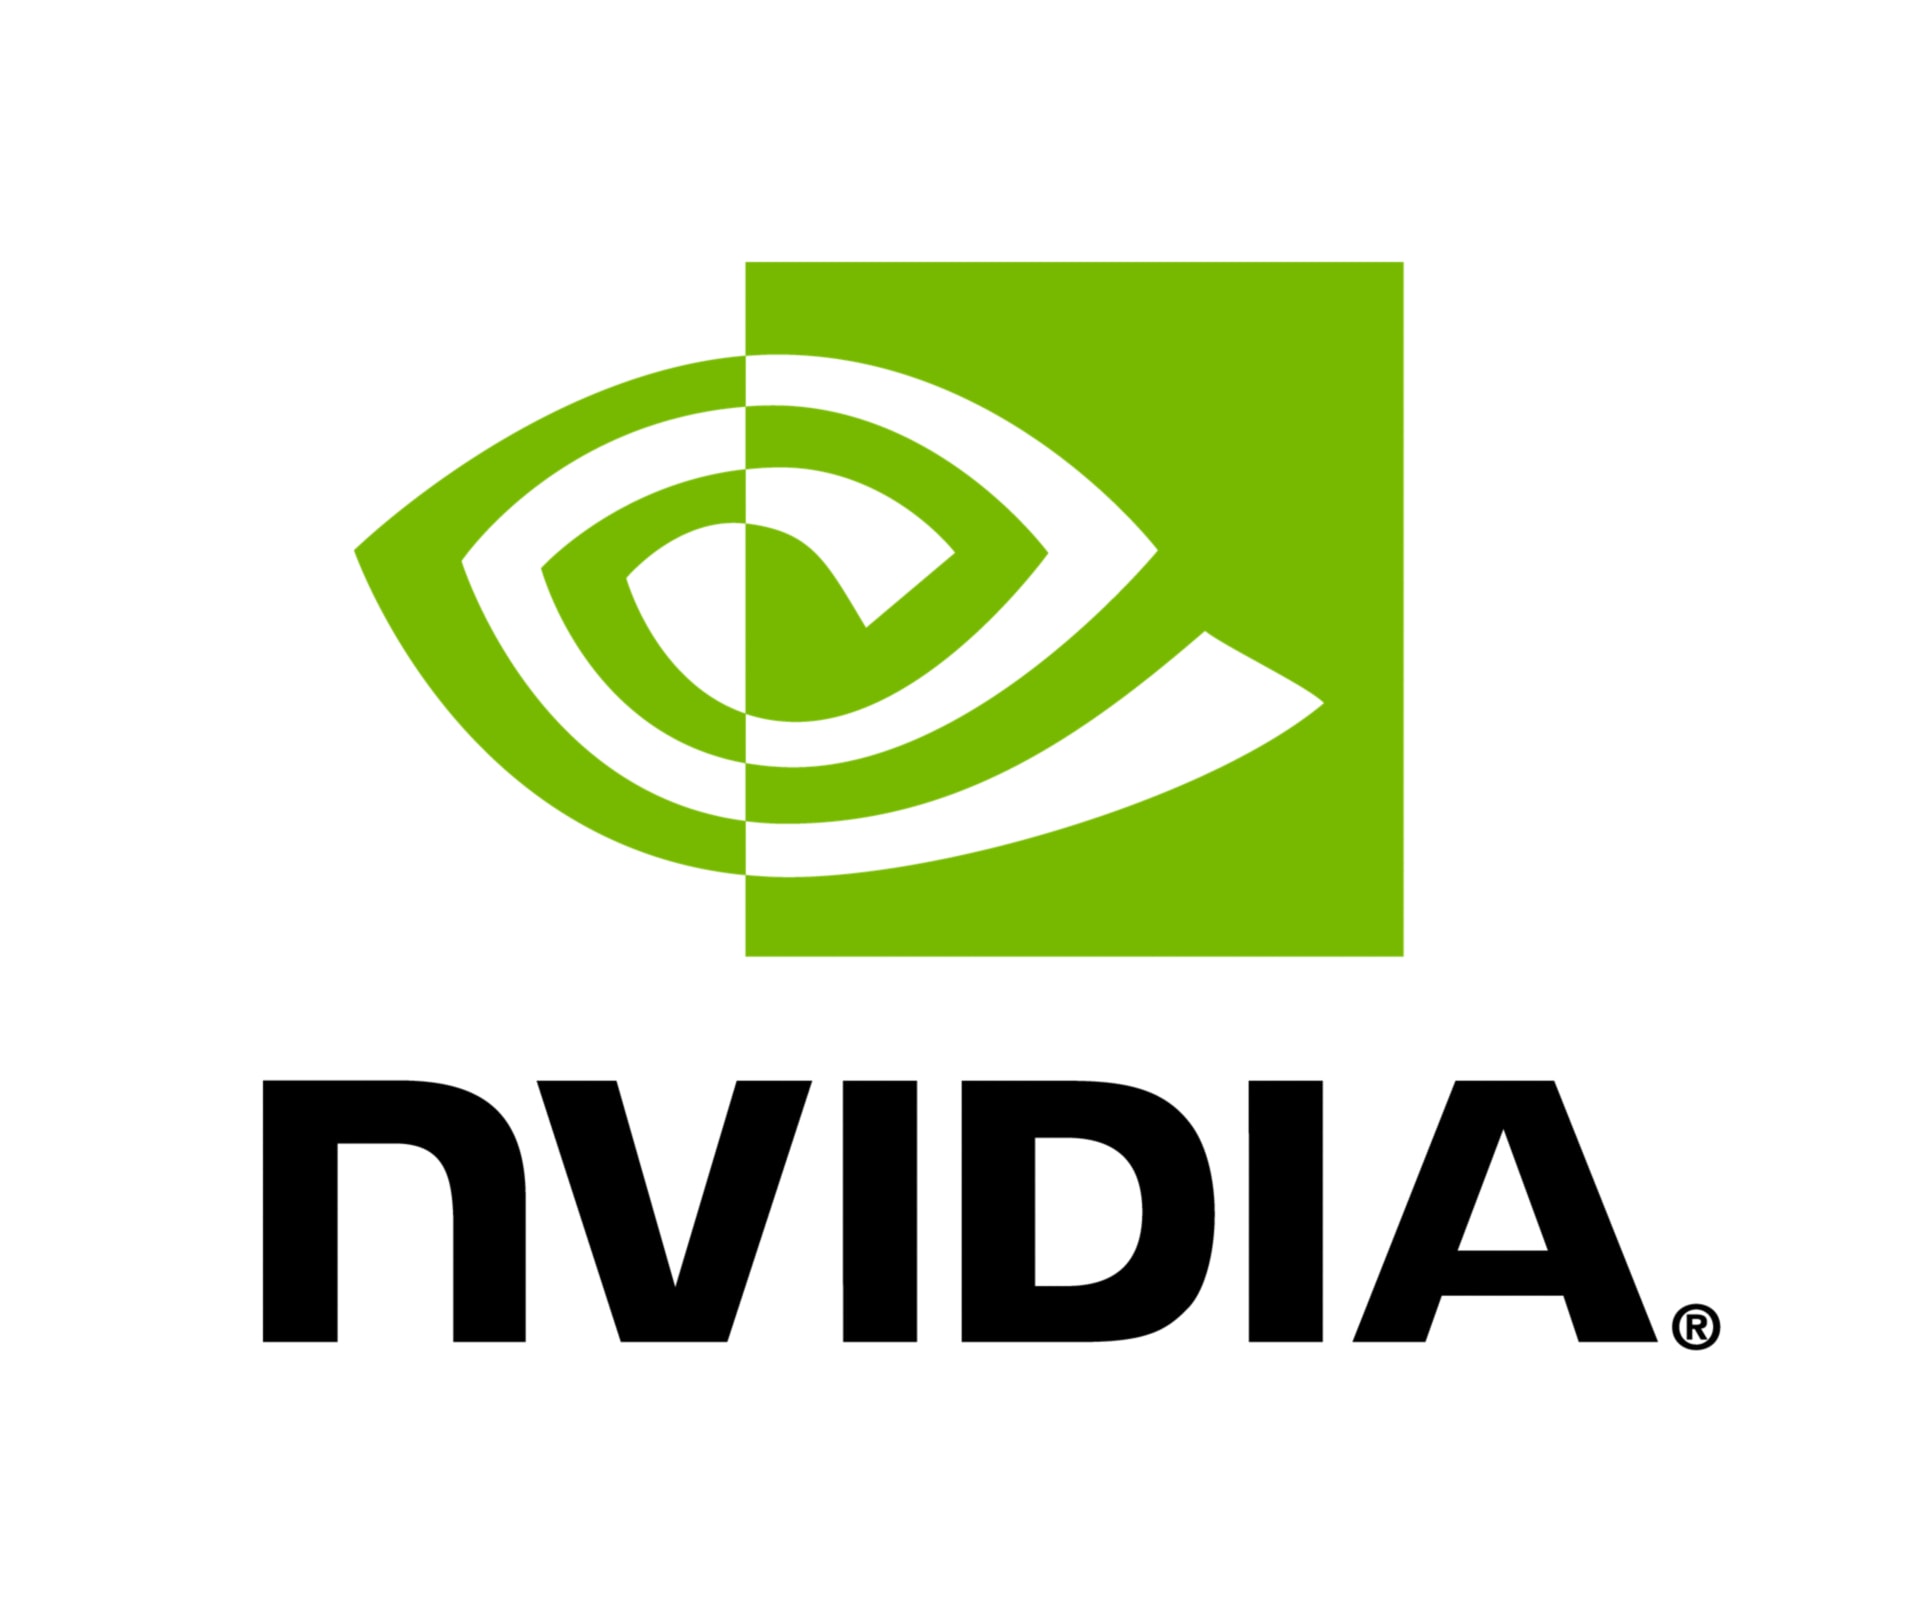 NVIDIA RTX Virtual Workstation - subscription license renewal (10 months) -